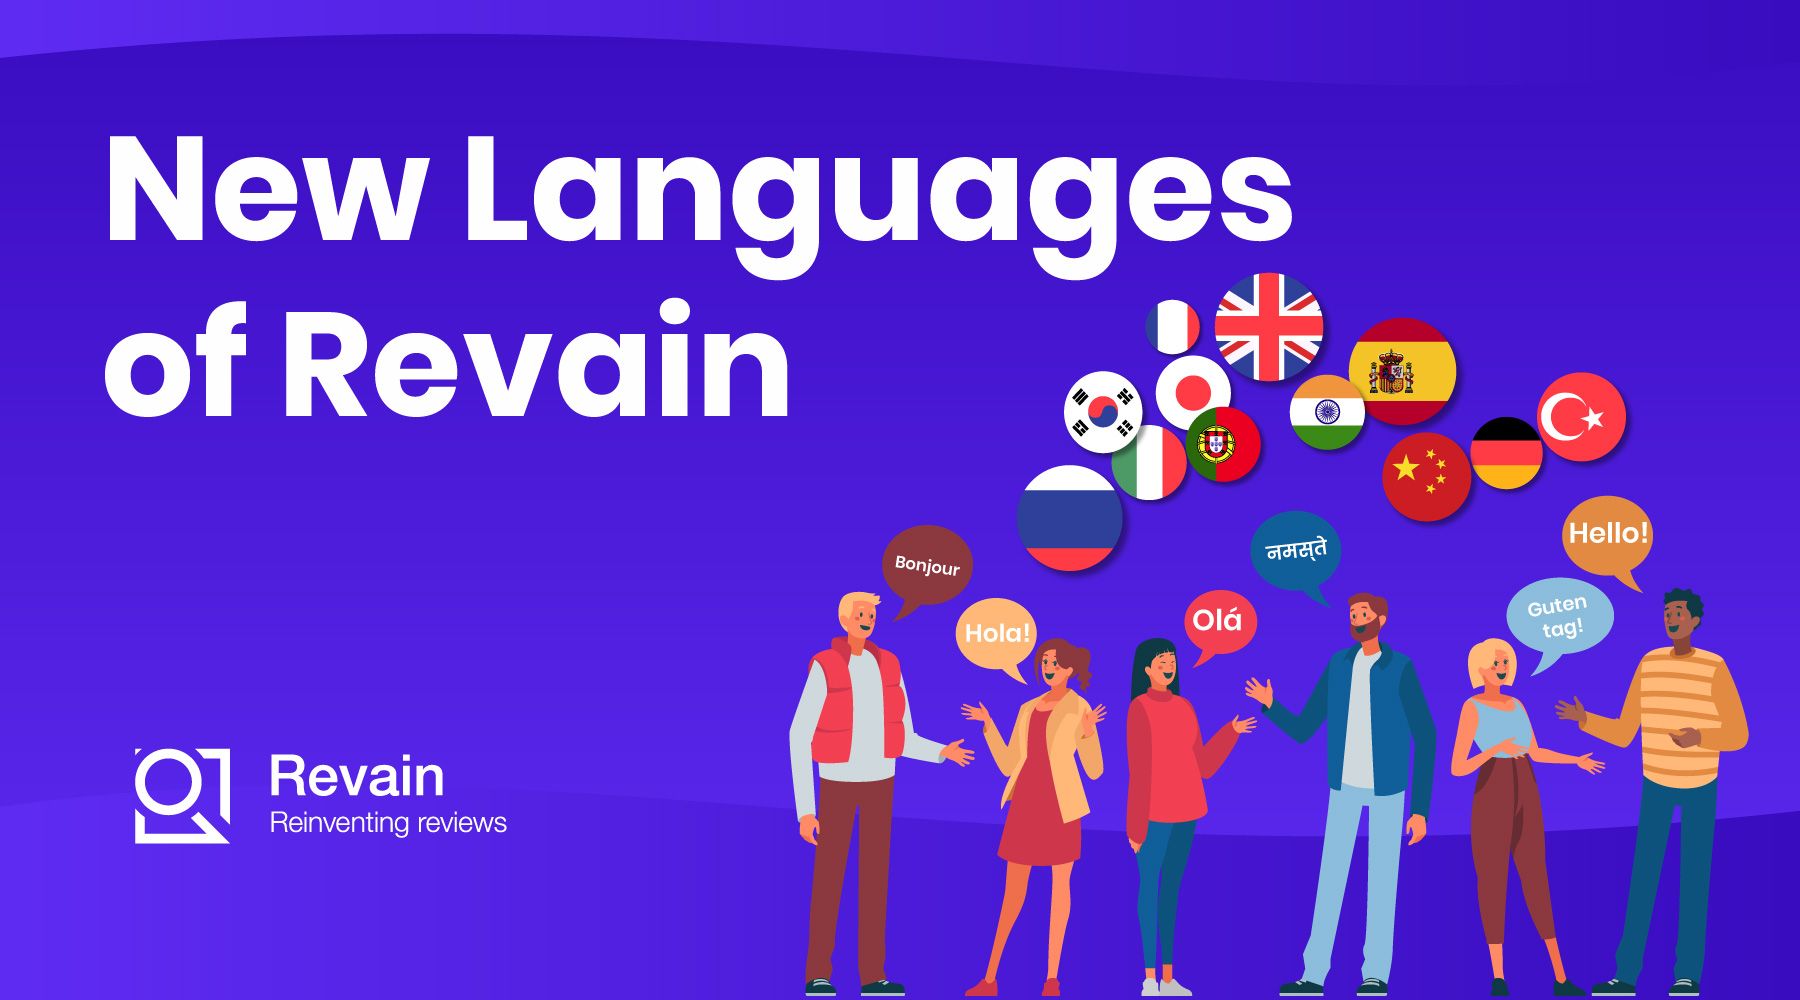 New languages of Revain